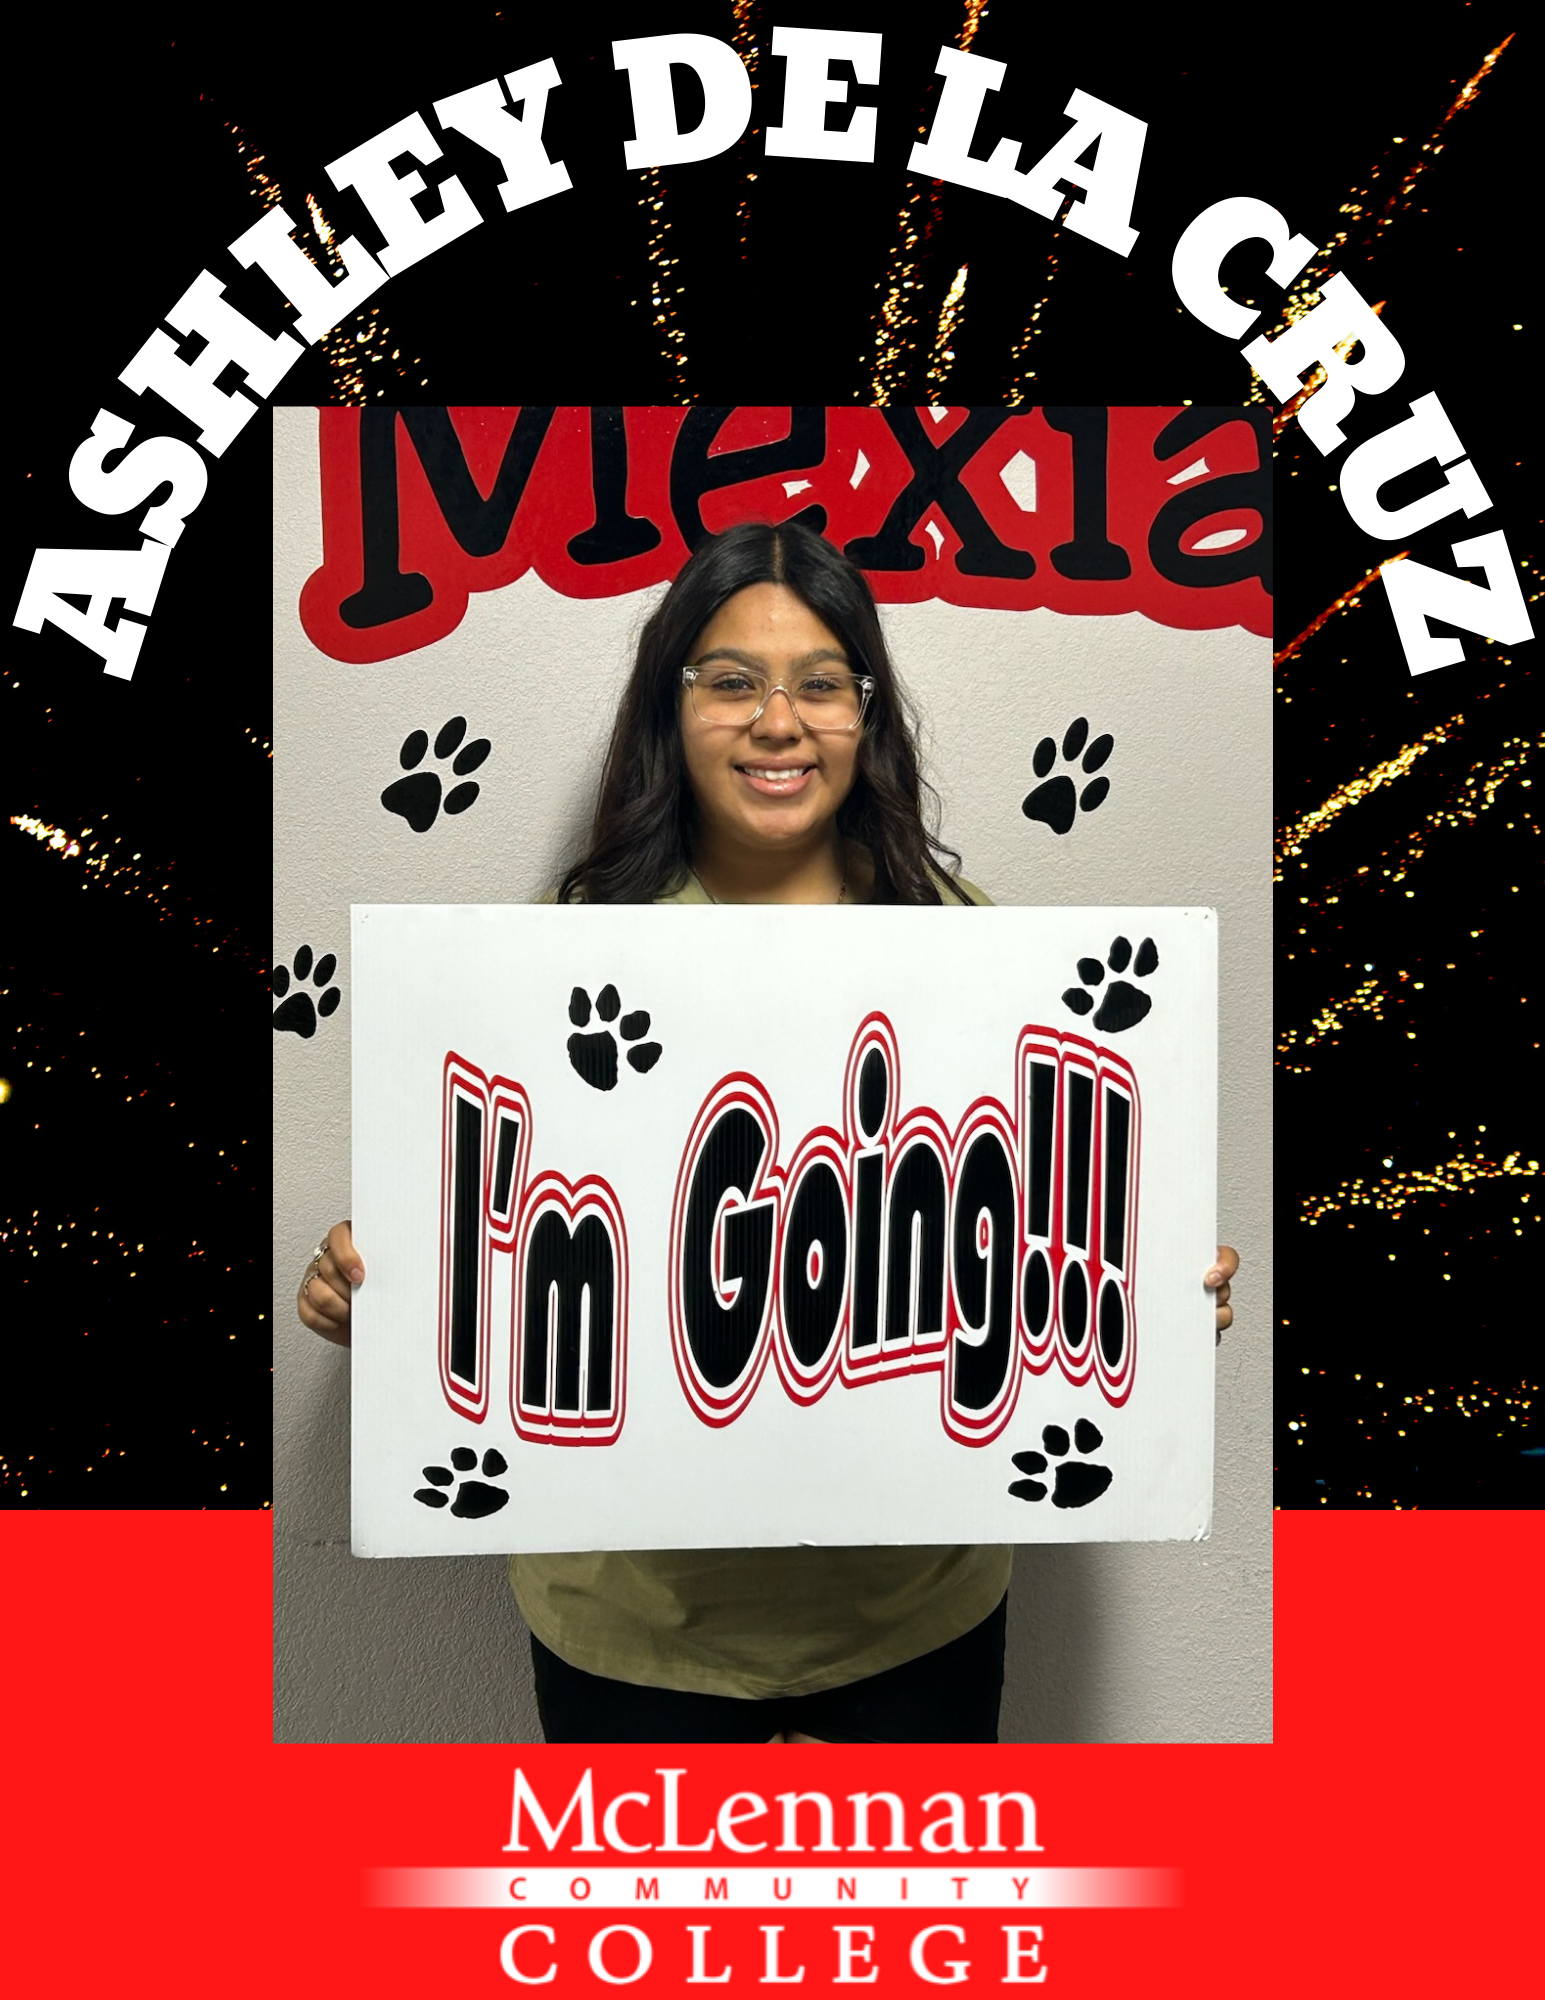 Ashley De La Cruz - I'm Going! - McLennan Community College